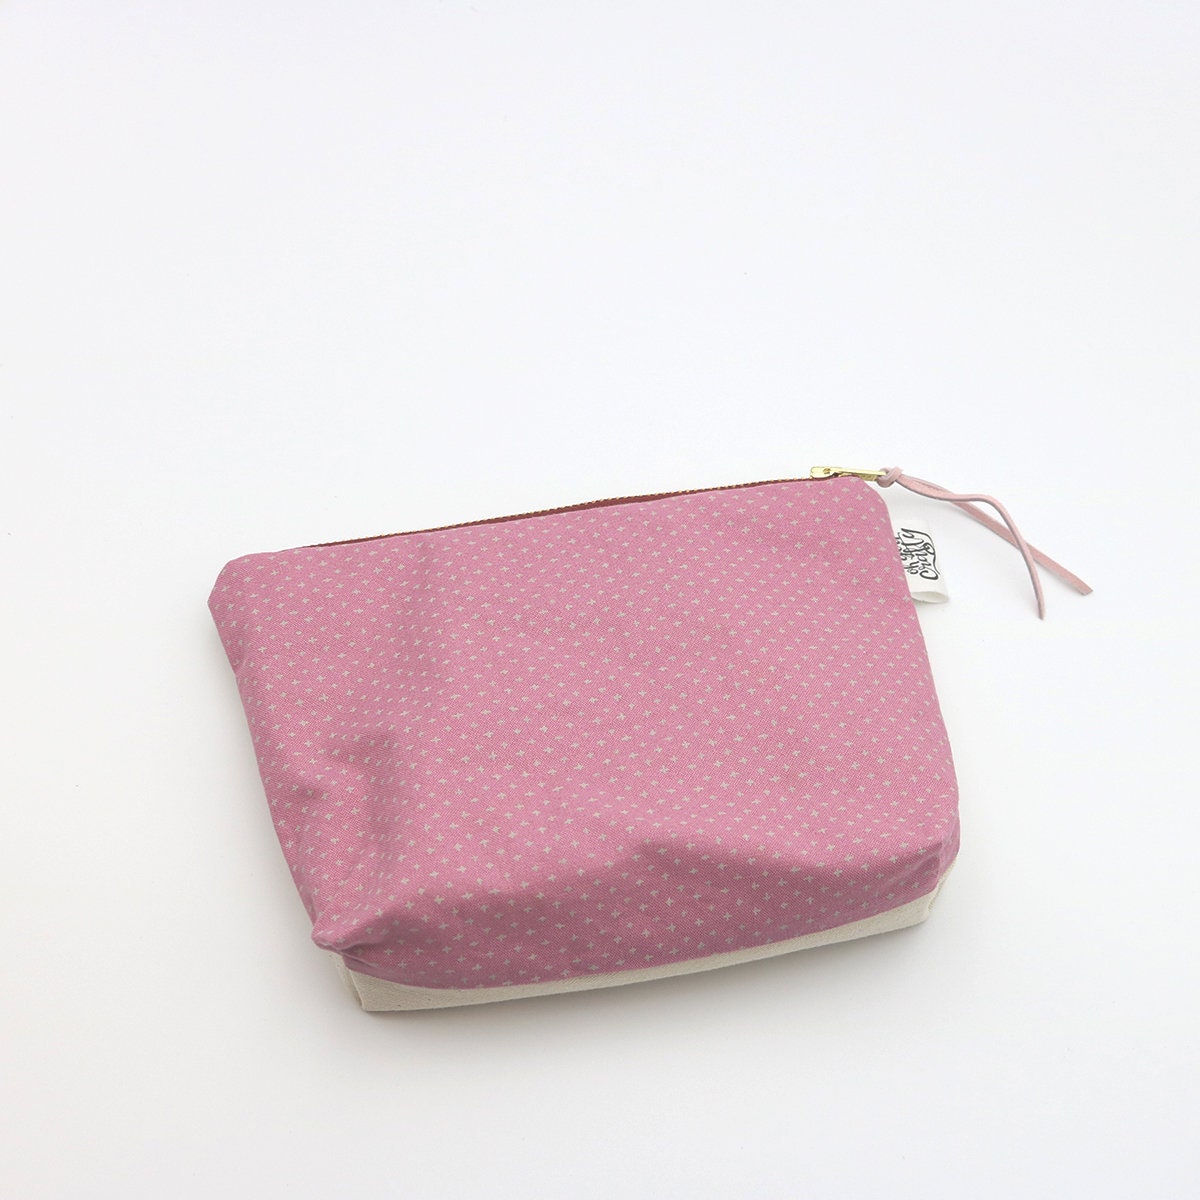 pencil bag Zipper pouch small makeup bag for purse